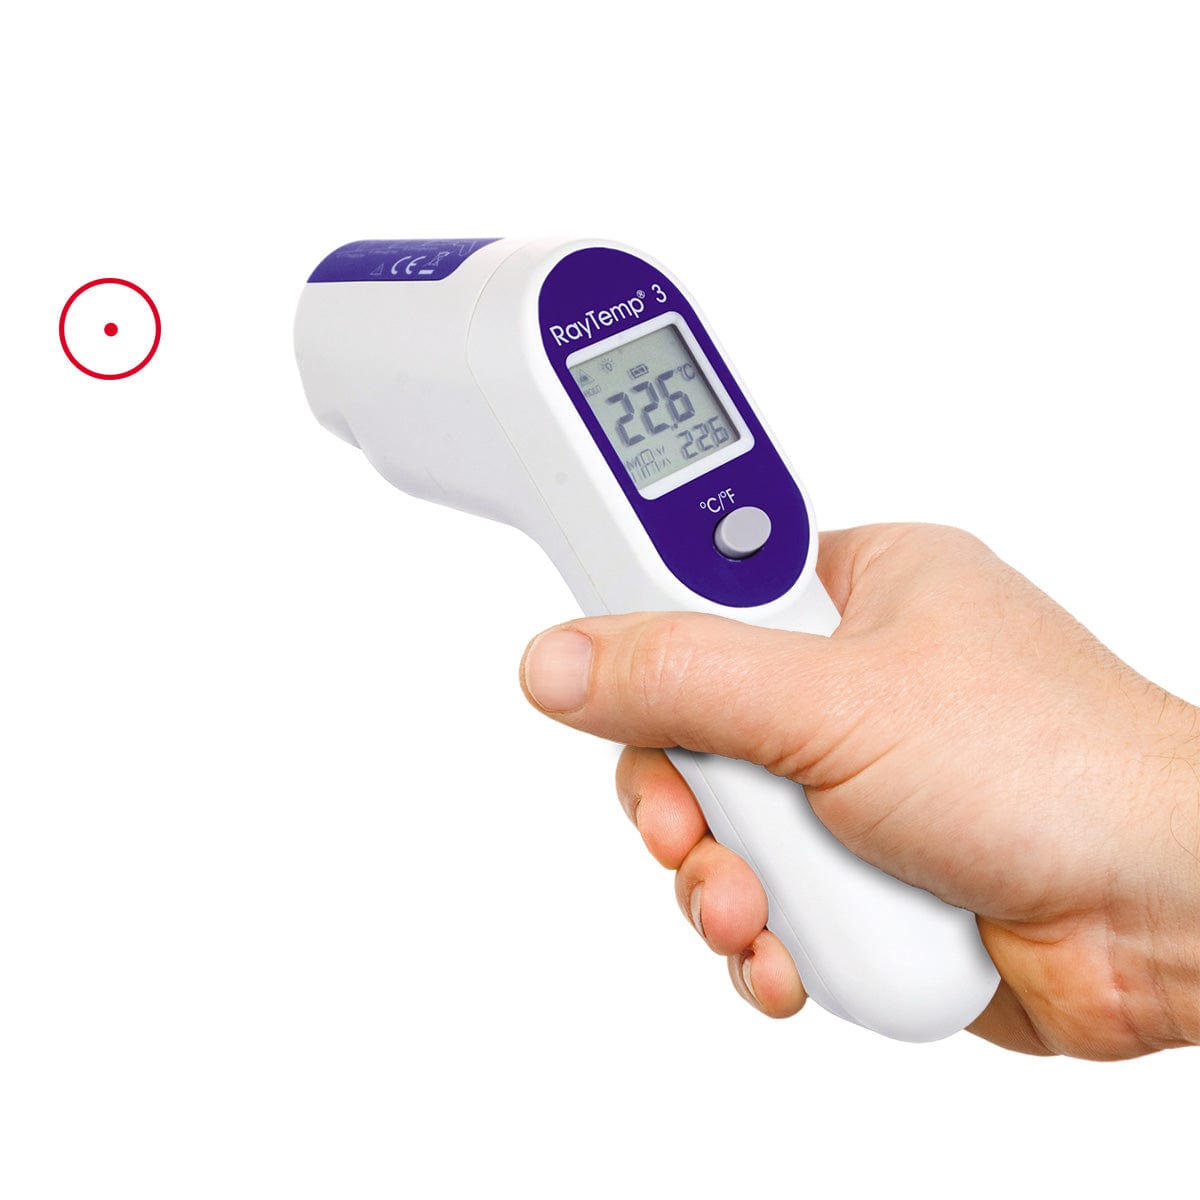 une main tenant un thermomètre infrarouge RayTemp 3 de Thermometre.fr.